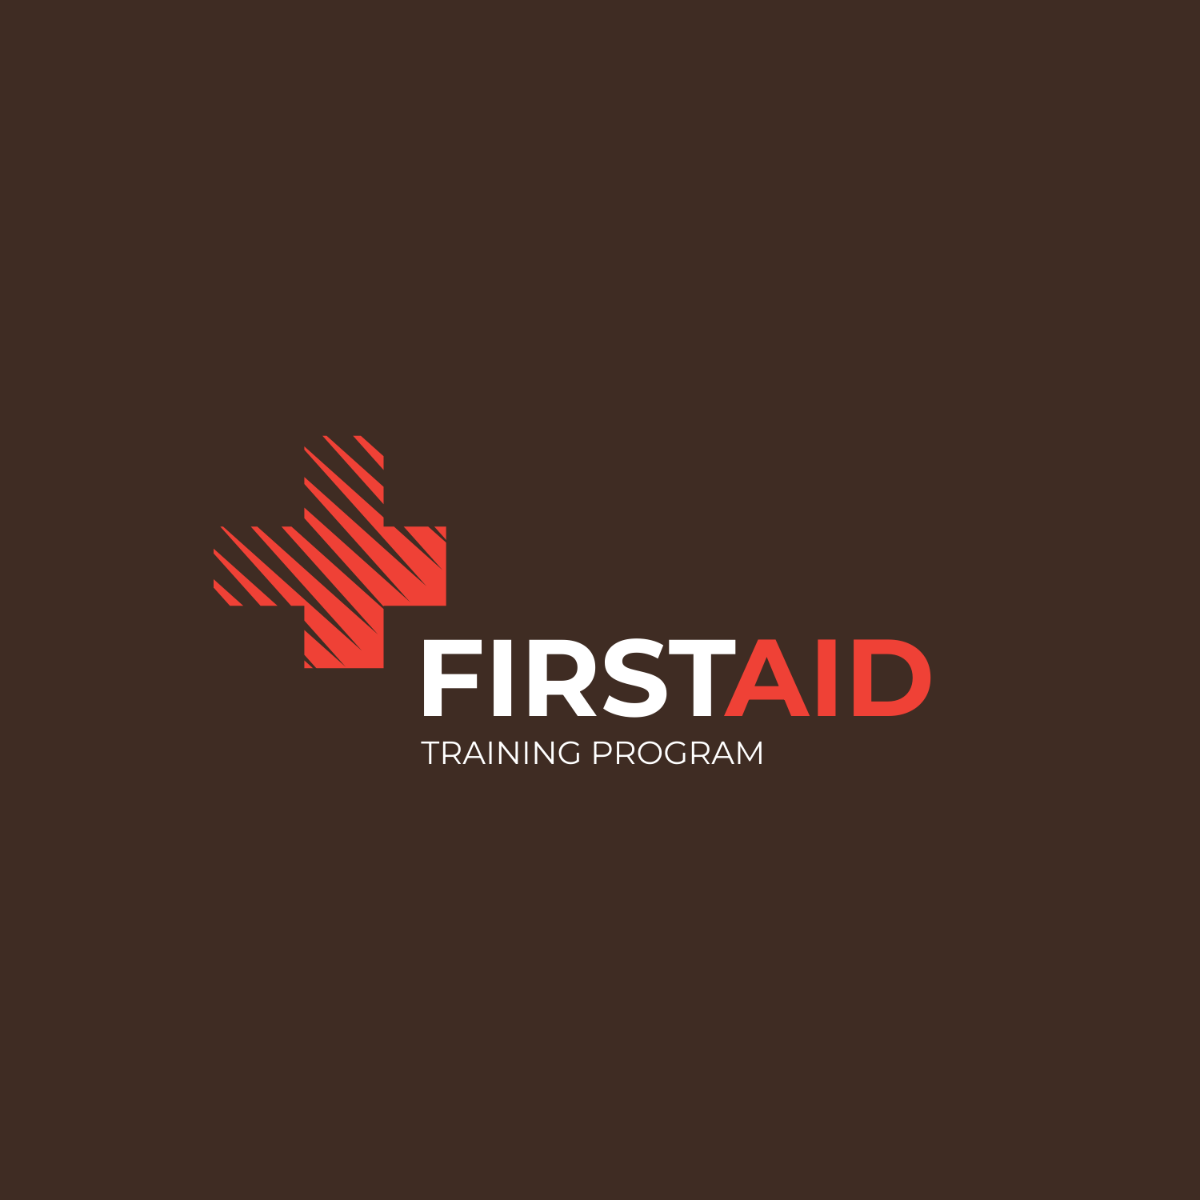 First Aid Training Program Logo Template